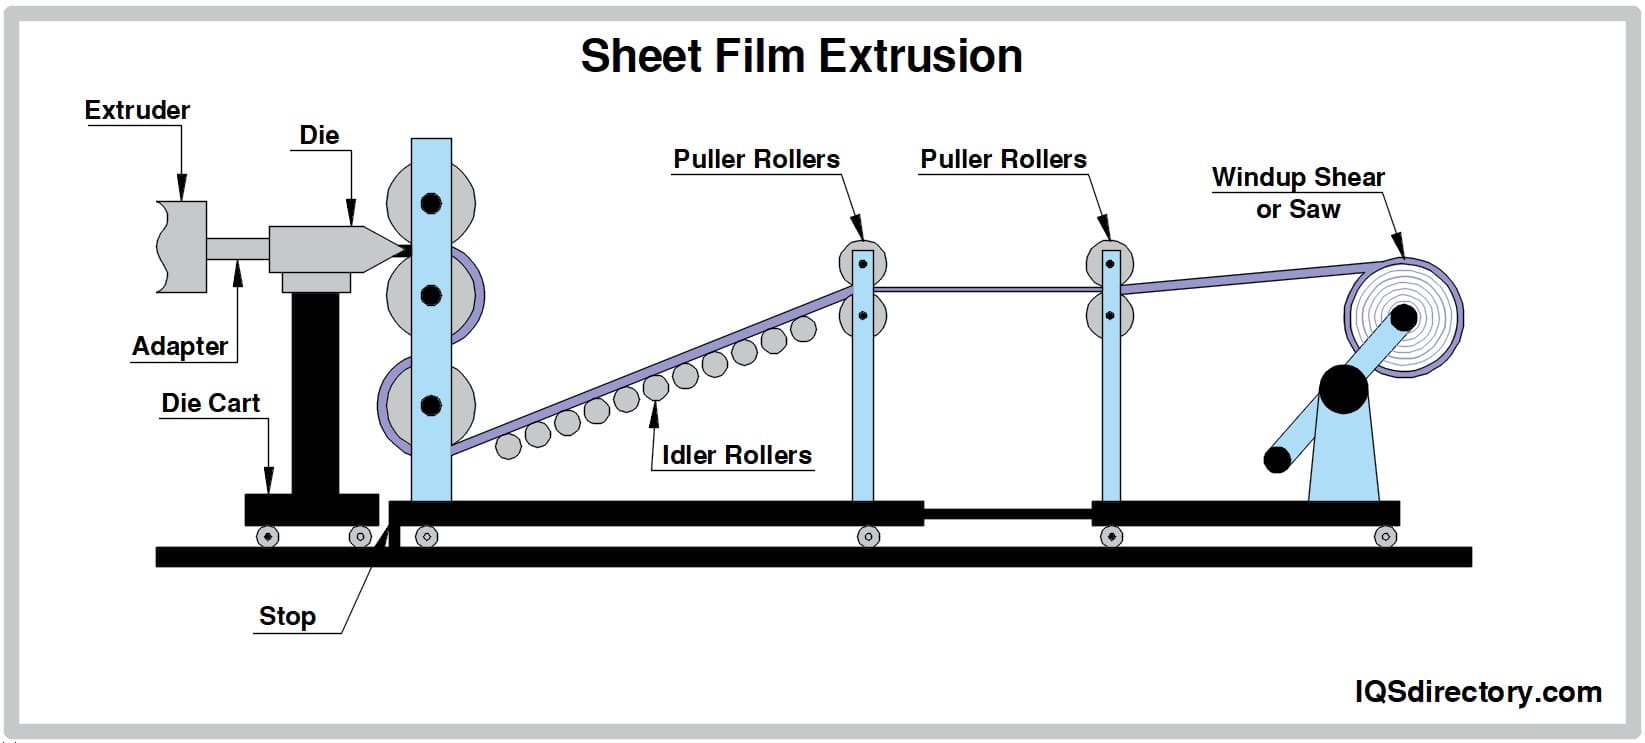 Sheet Film Extrusion